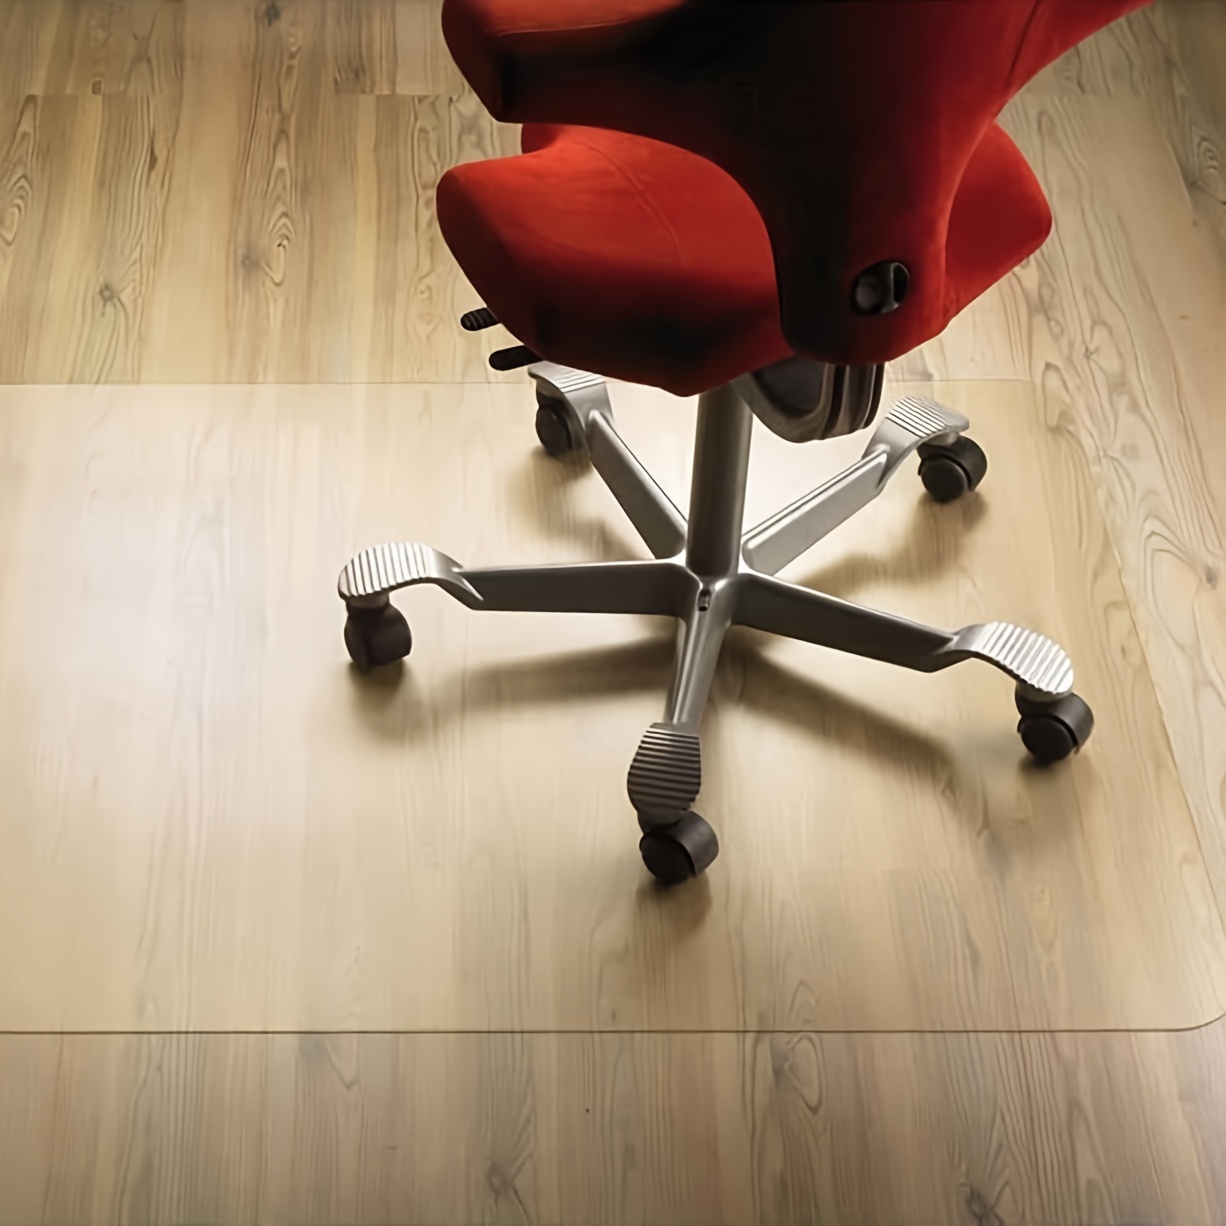 Office Chair Mat For Hardwood Tile Floor Computer Gaming - Temu